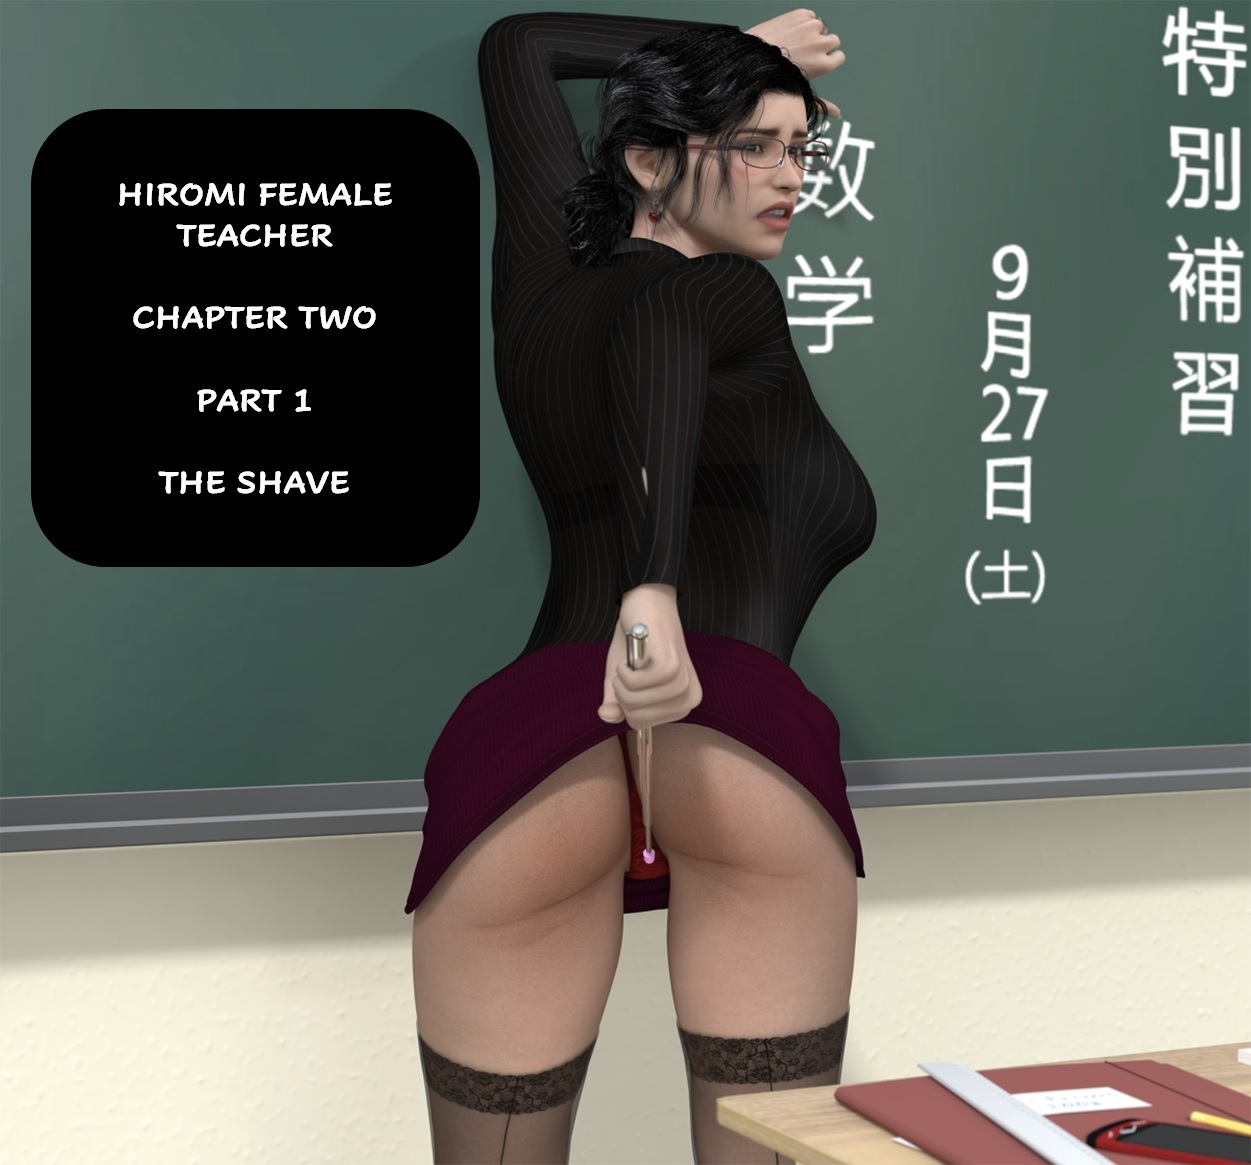 Female Teacher Porno